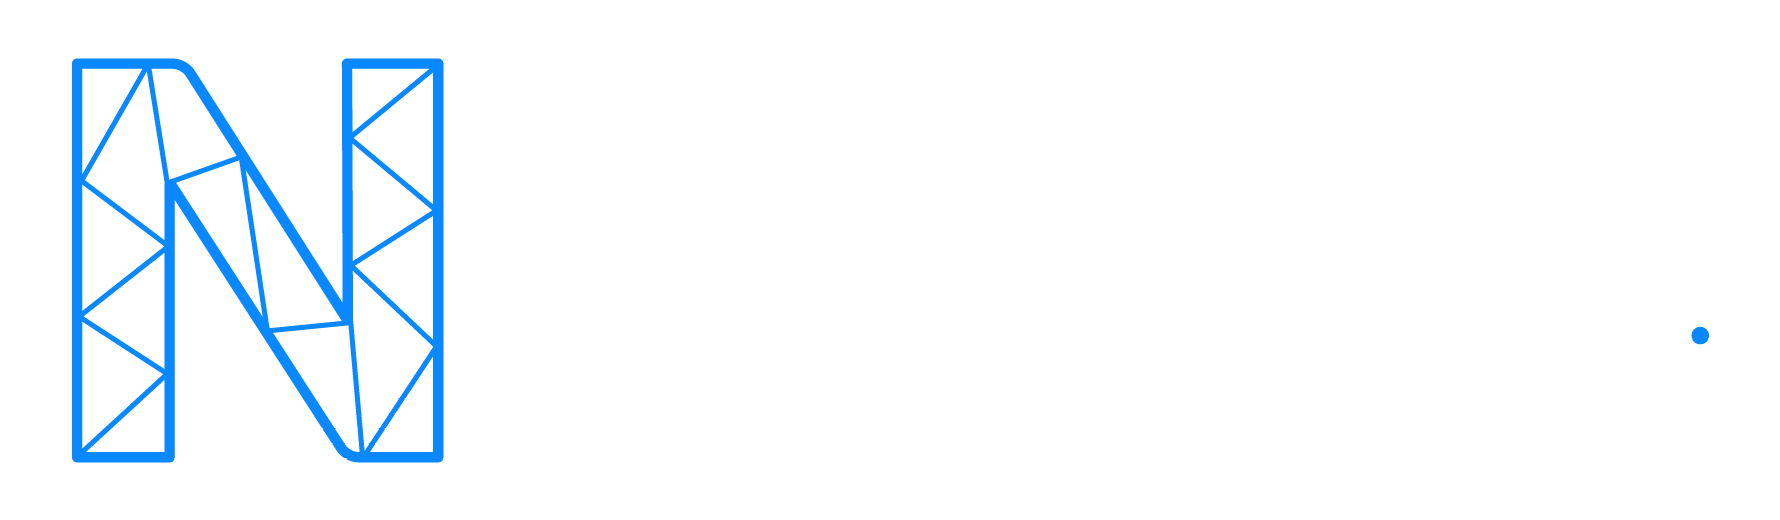 Nordasys White Logo